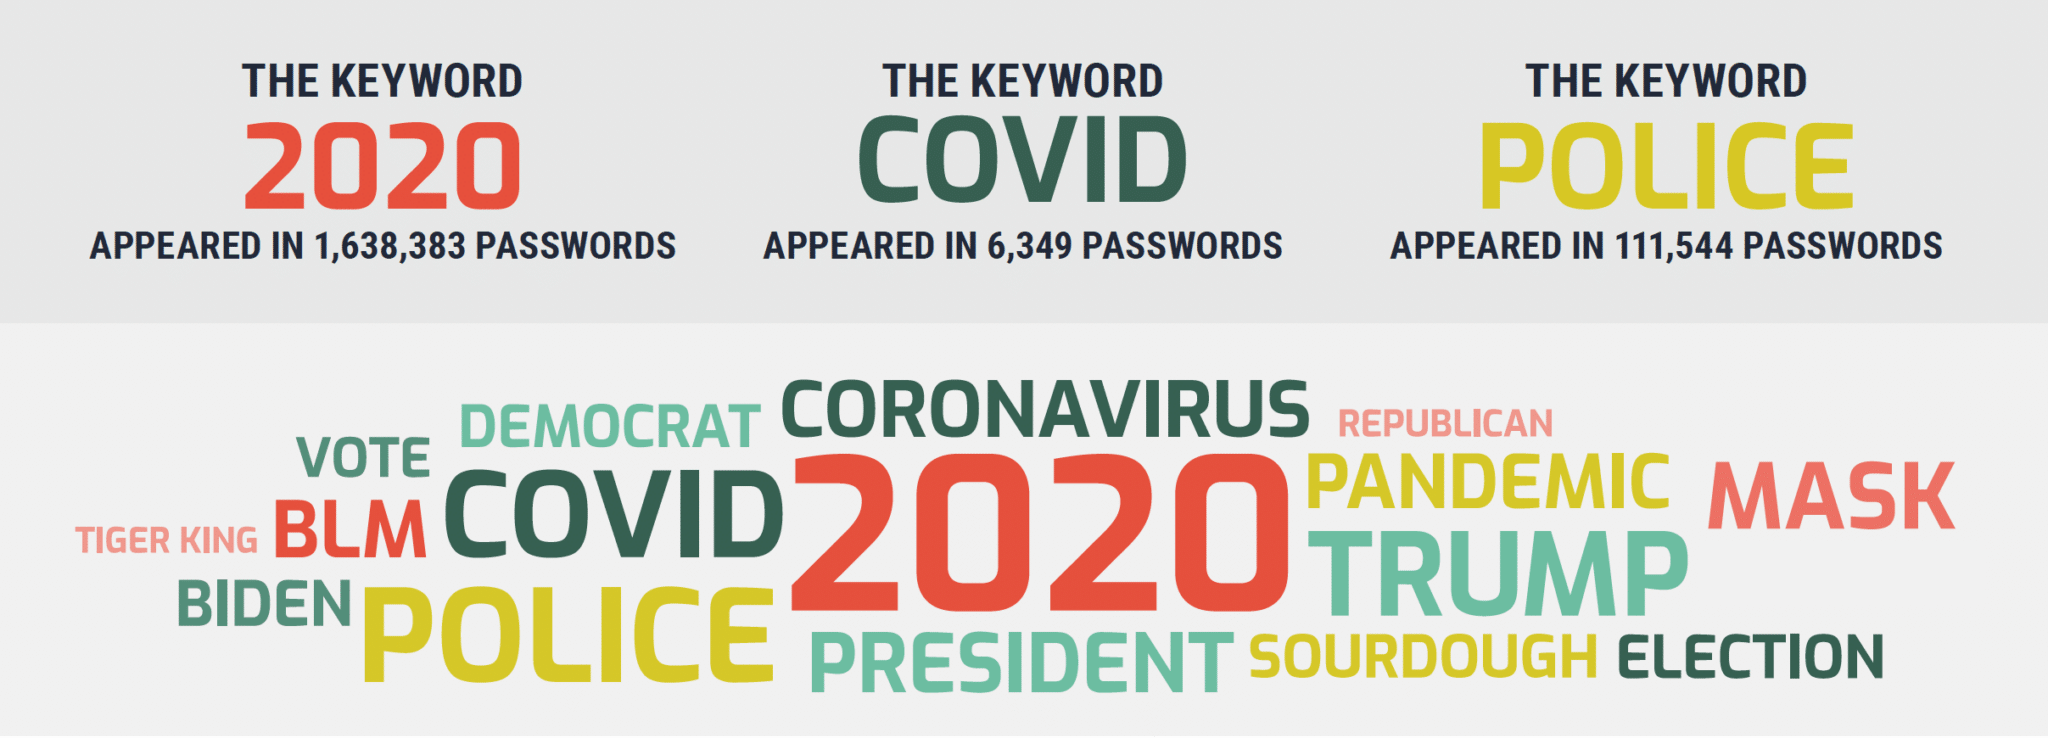 Popular password keywords in 2020